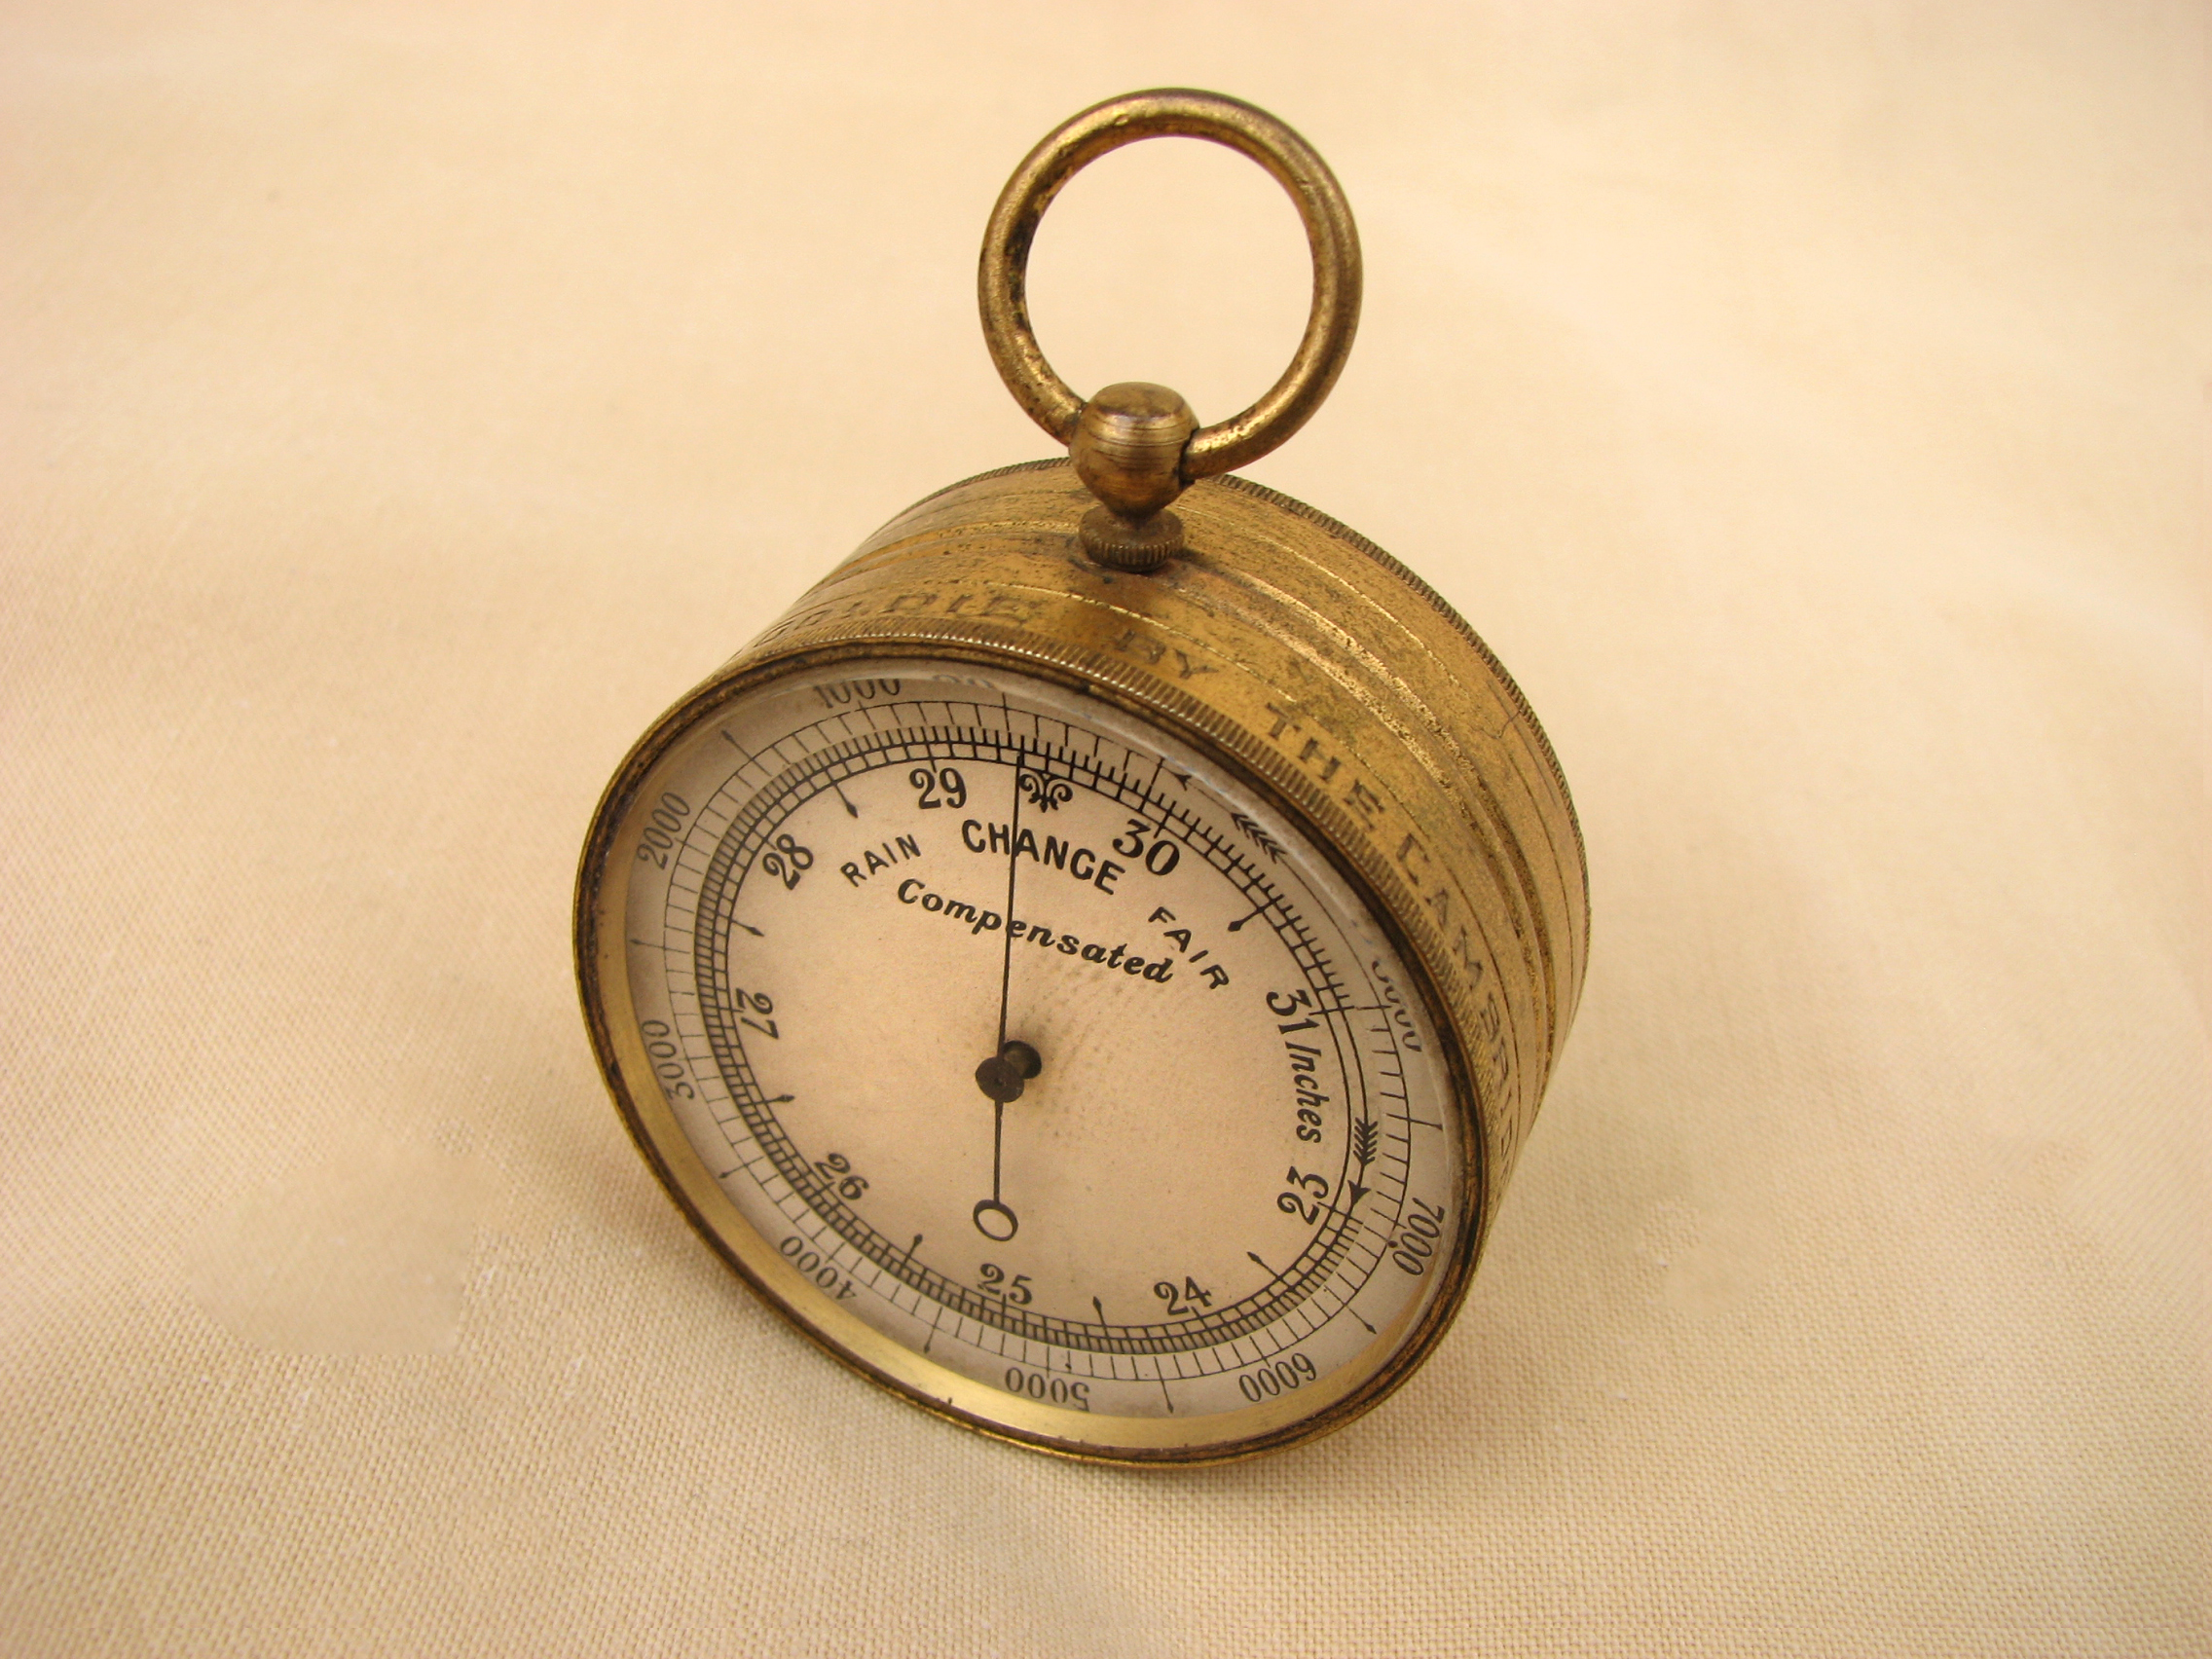 1903 University Boat Race pocket barometer from Cambridge crew to CJD Goldie